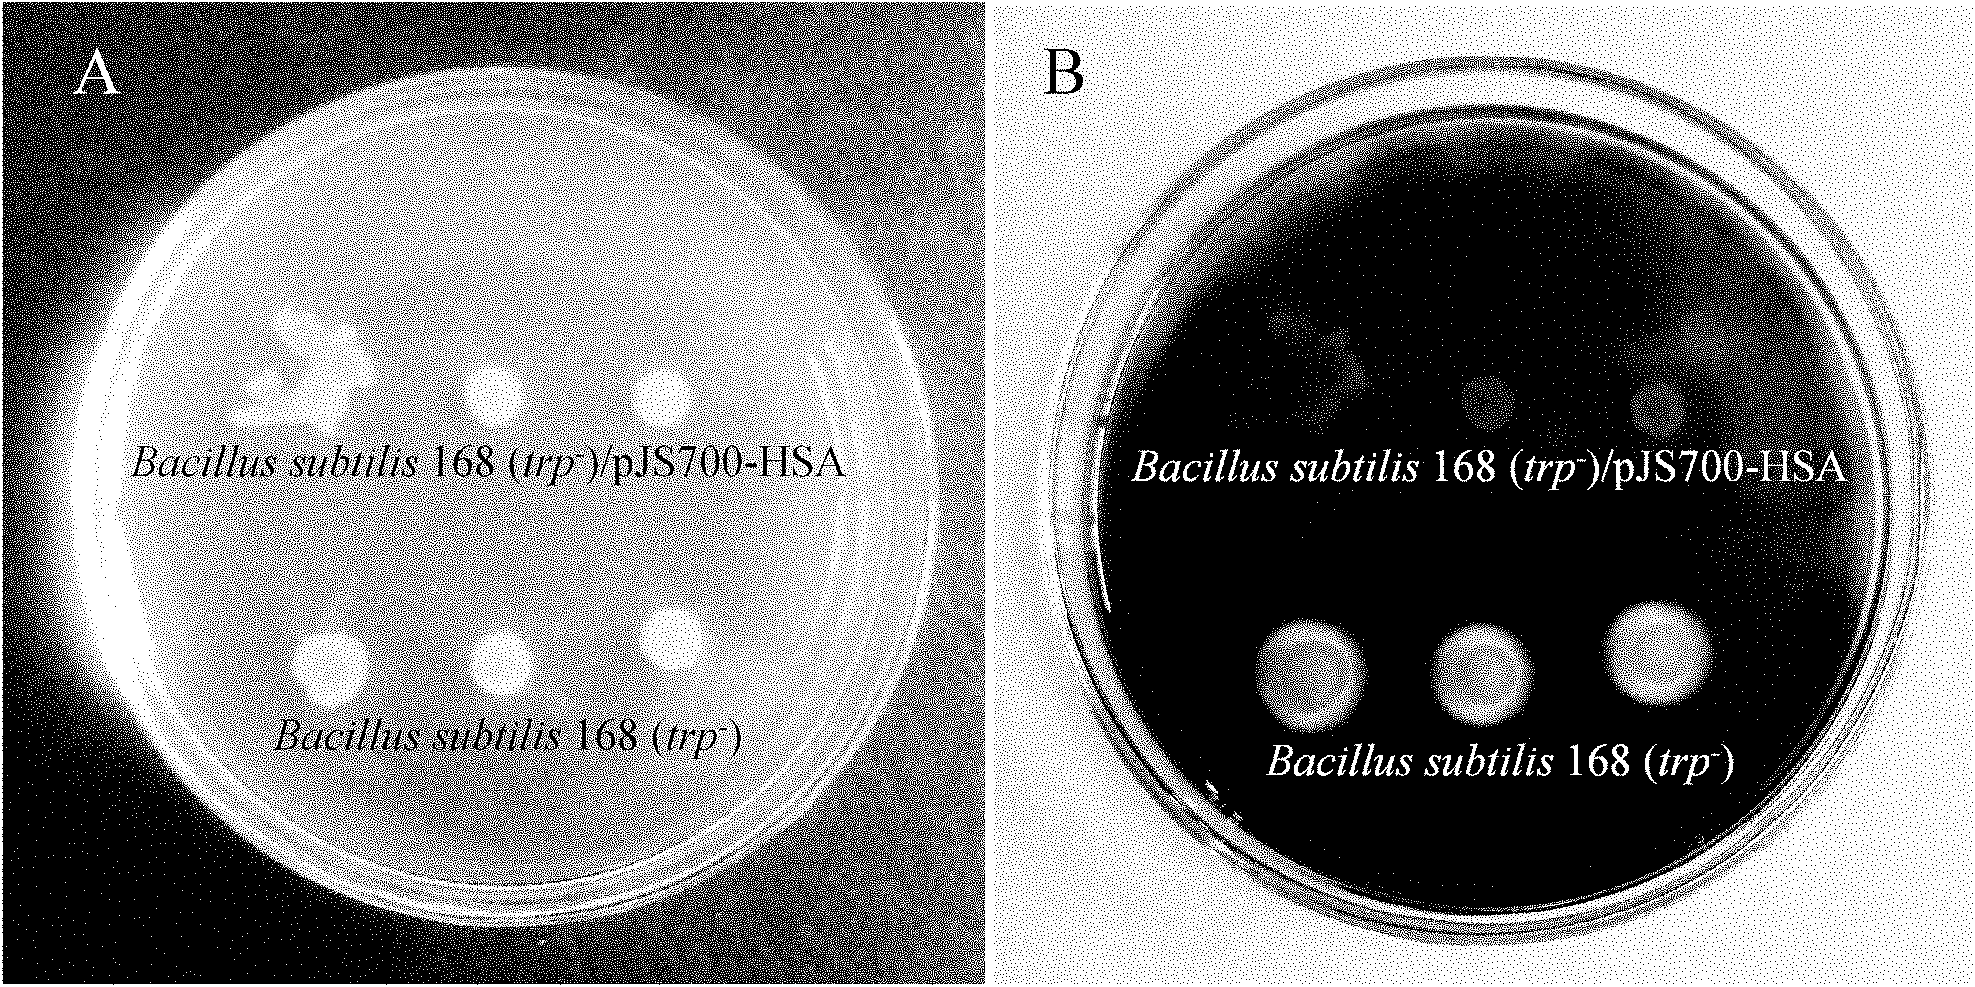 Recombinant spore for displaying human serum albumin on surface of bacillus subtilis and preparation method thereof